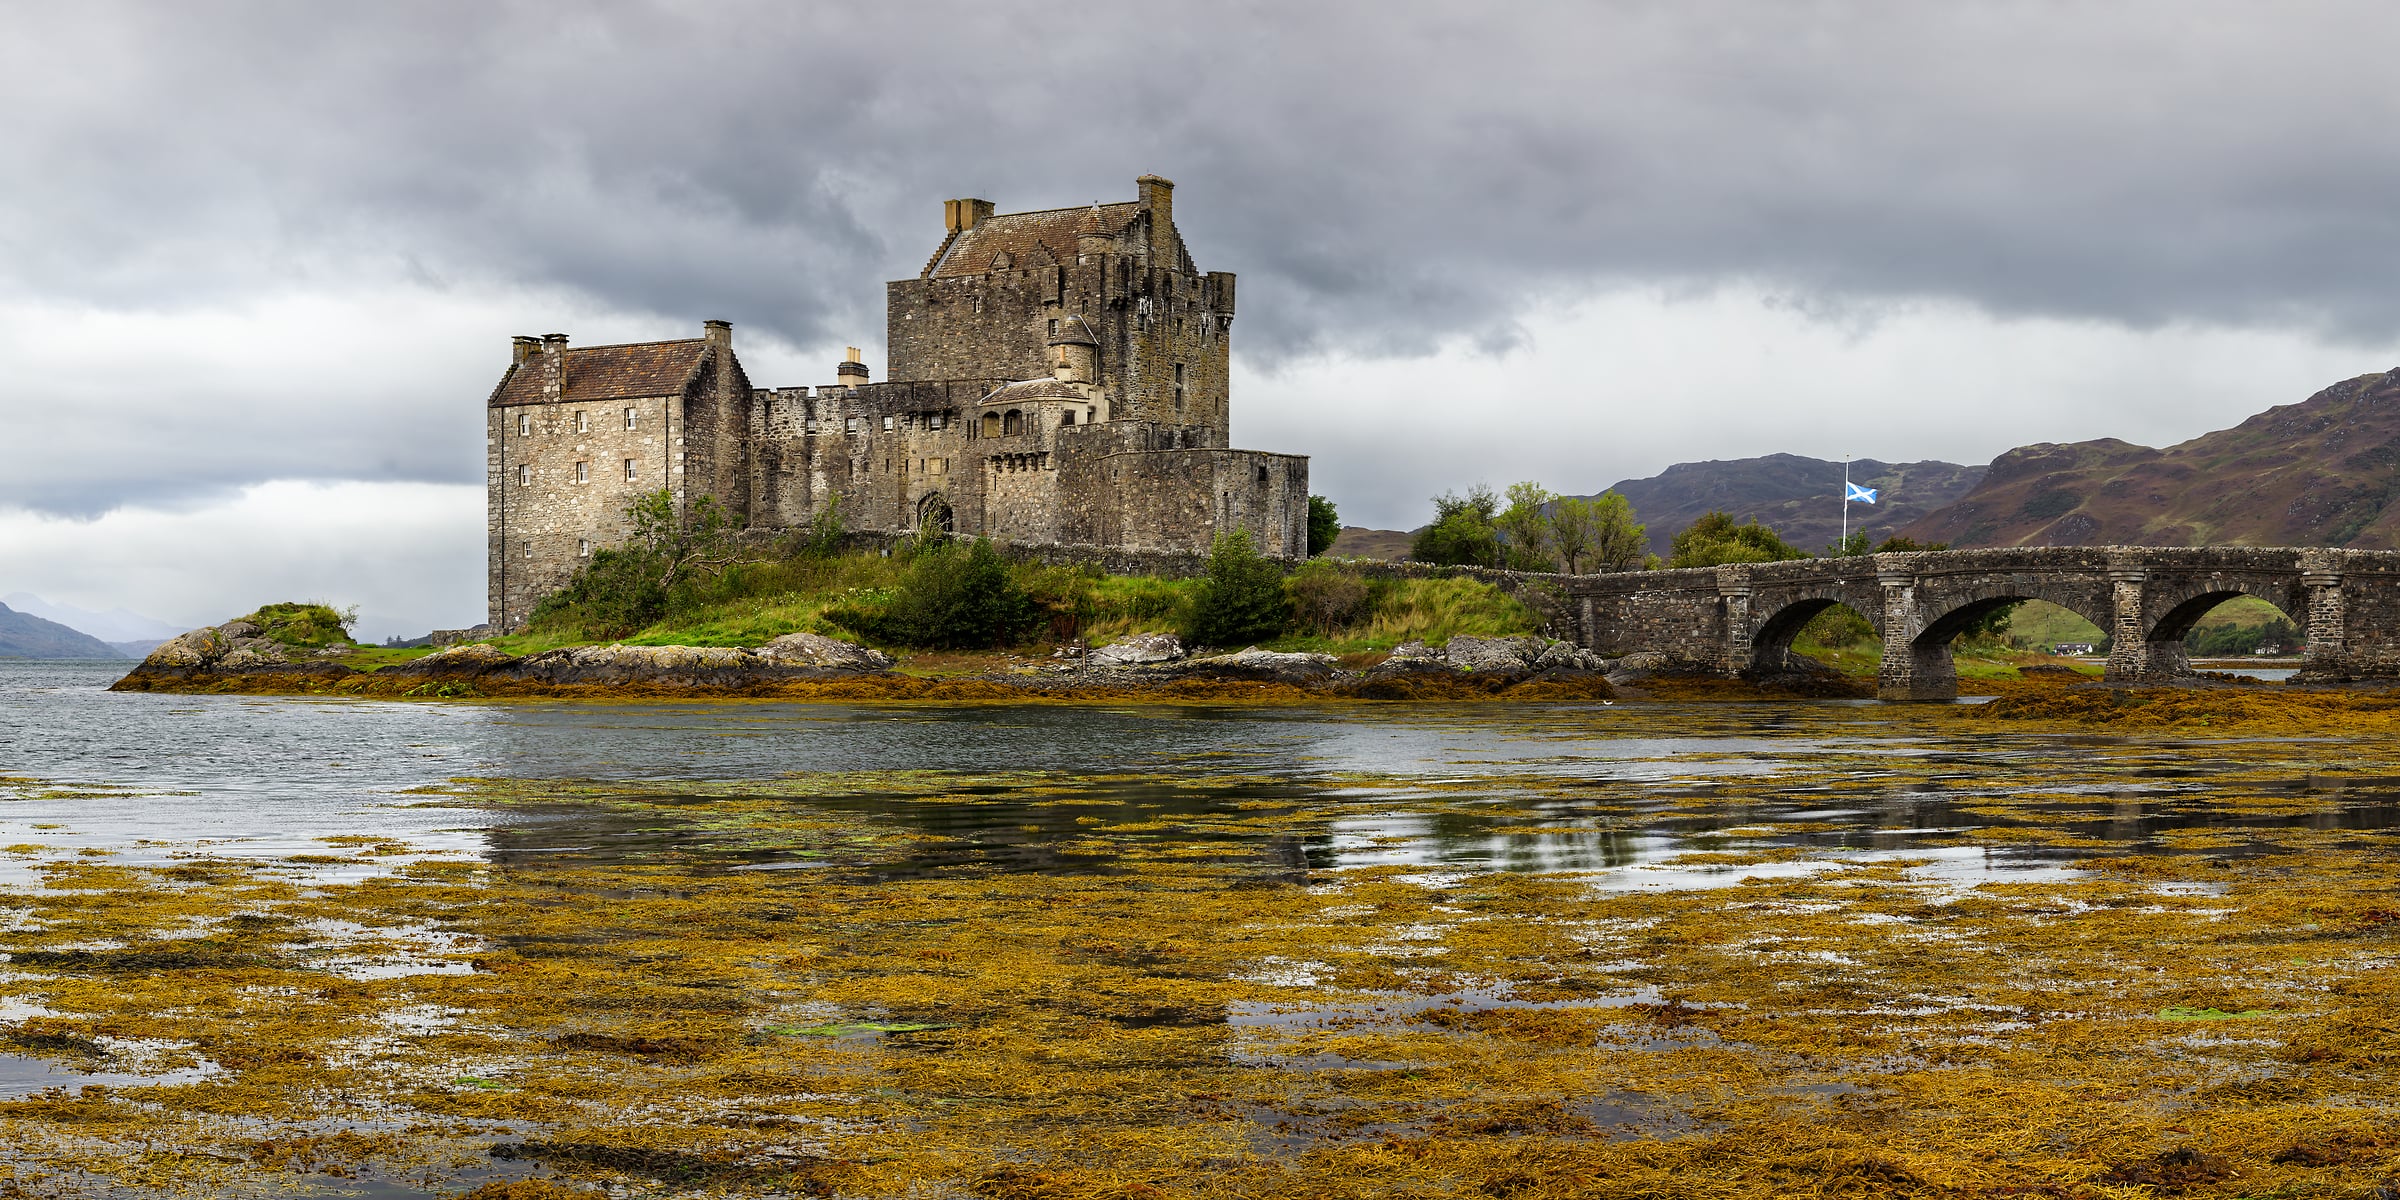 686 megapixels! A very high resolution, large-format VAST photo print of a Castle in Scotland; photograph created by Scott Dimond at Eilean Donan Castle, Dornie, Kyle of Lochalsh, United Kingdon.